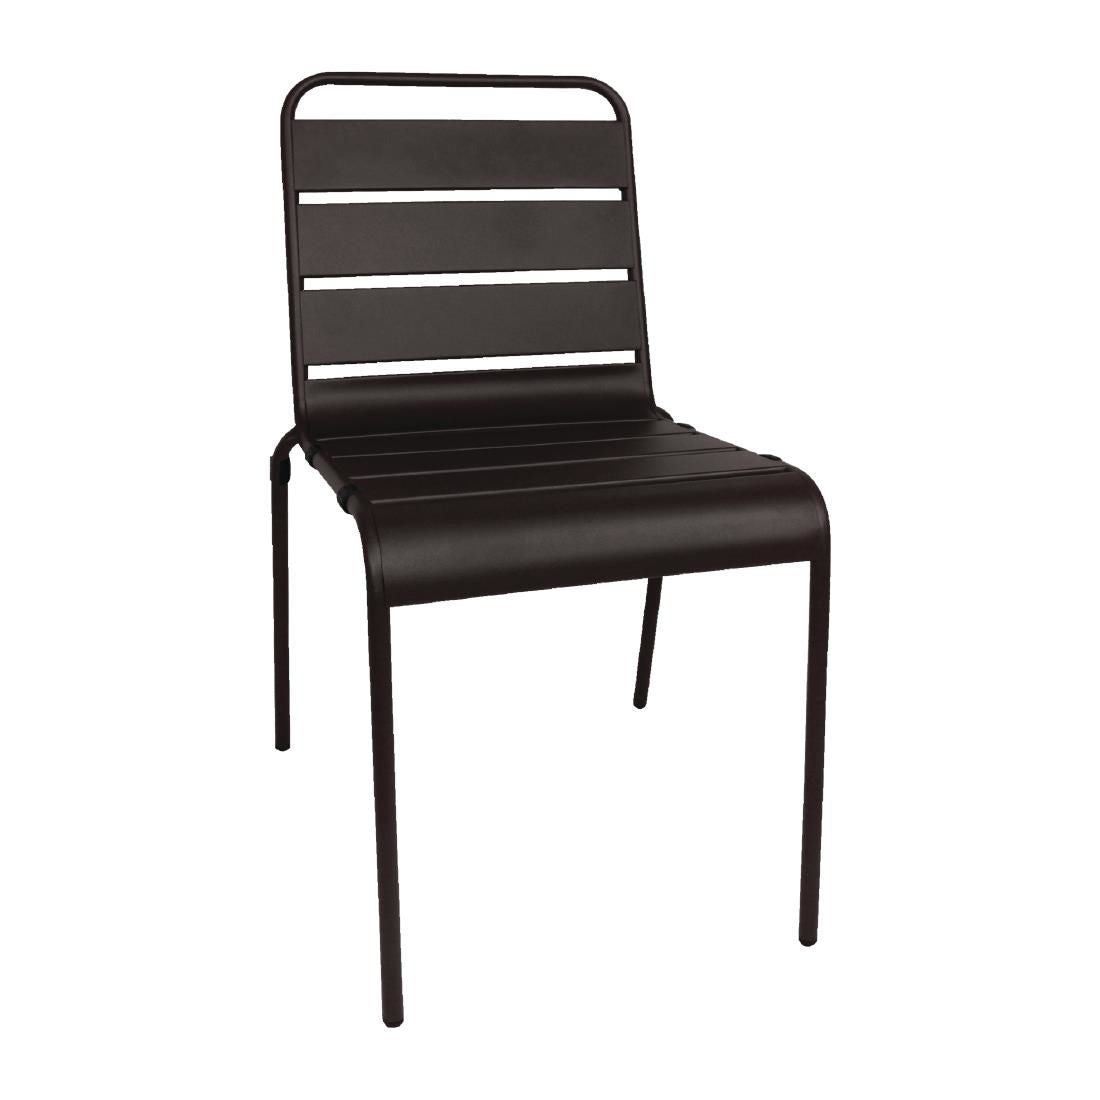 Bolero Black Slatted Steel Side Chairs (Pack of 4) JD Catering Equipment Solutions Ltd